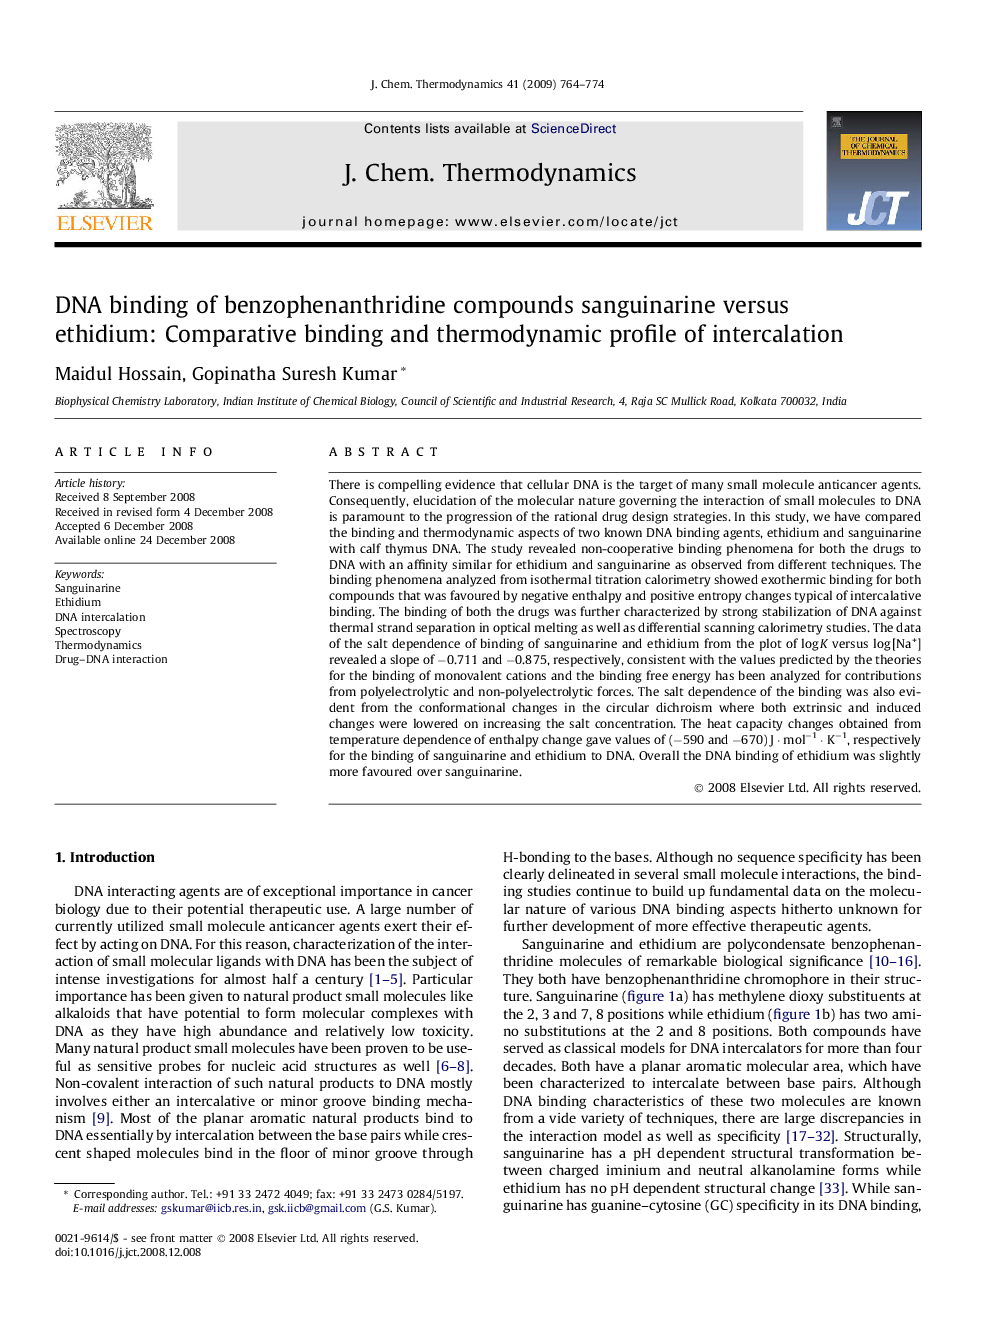 DNA binding of benzophenanthridine compounds sanguinarine versus ethidium: Comparative binding and thermodynamic profile of intercalation